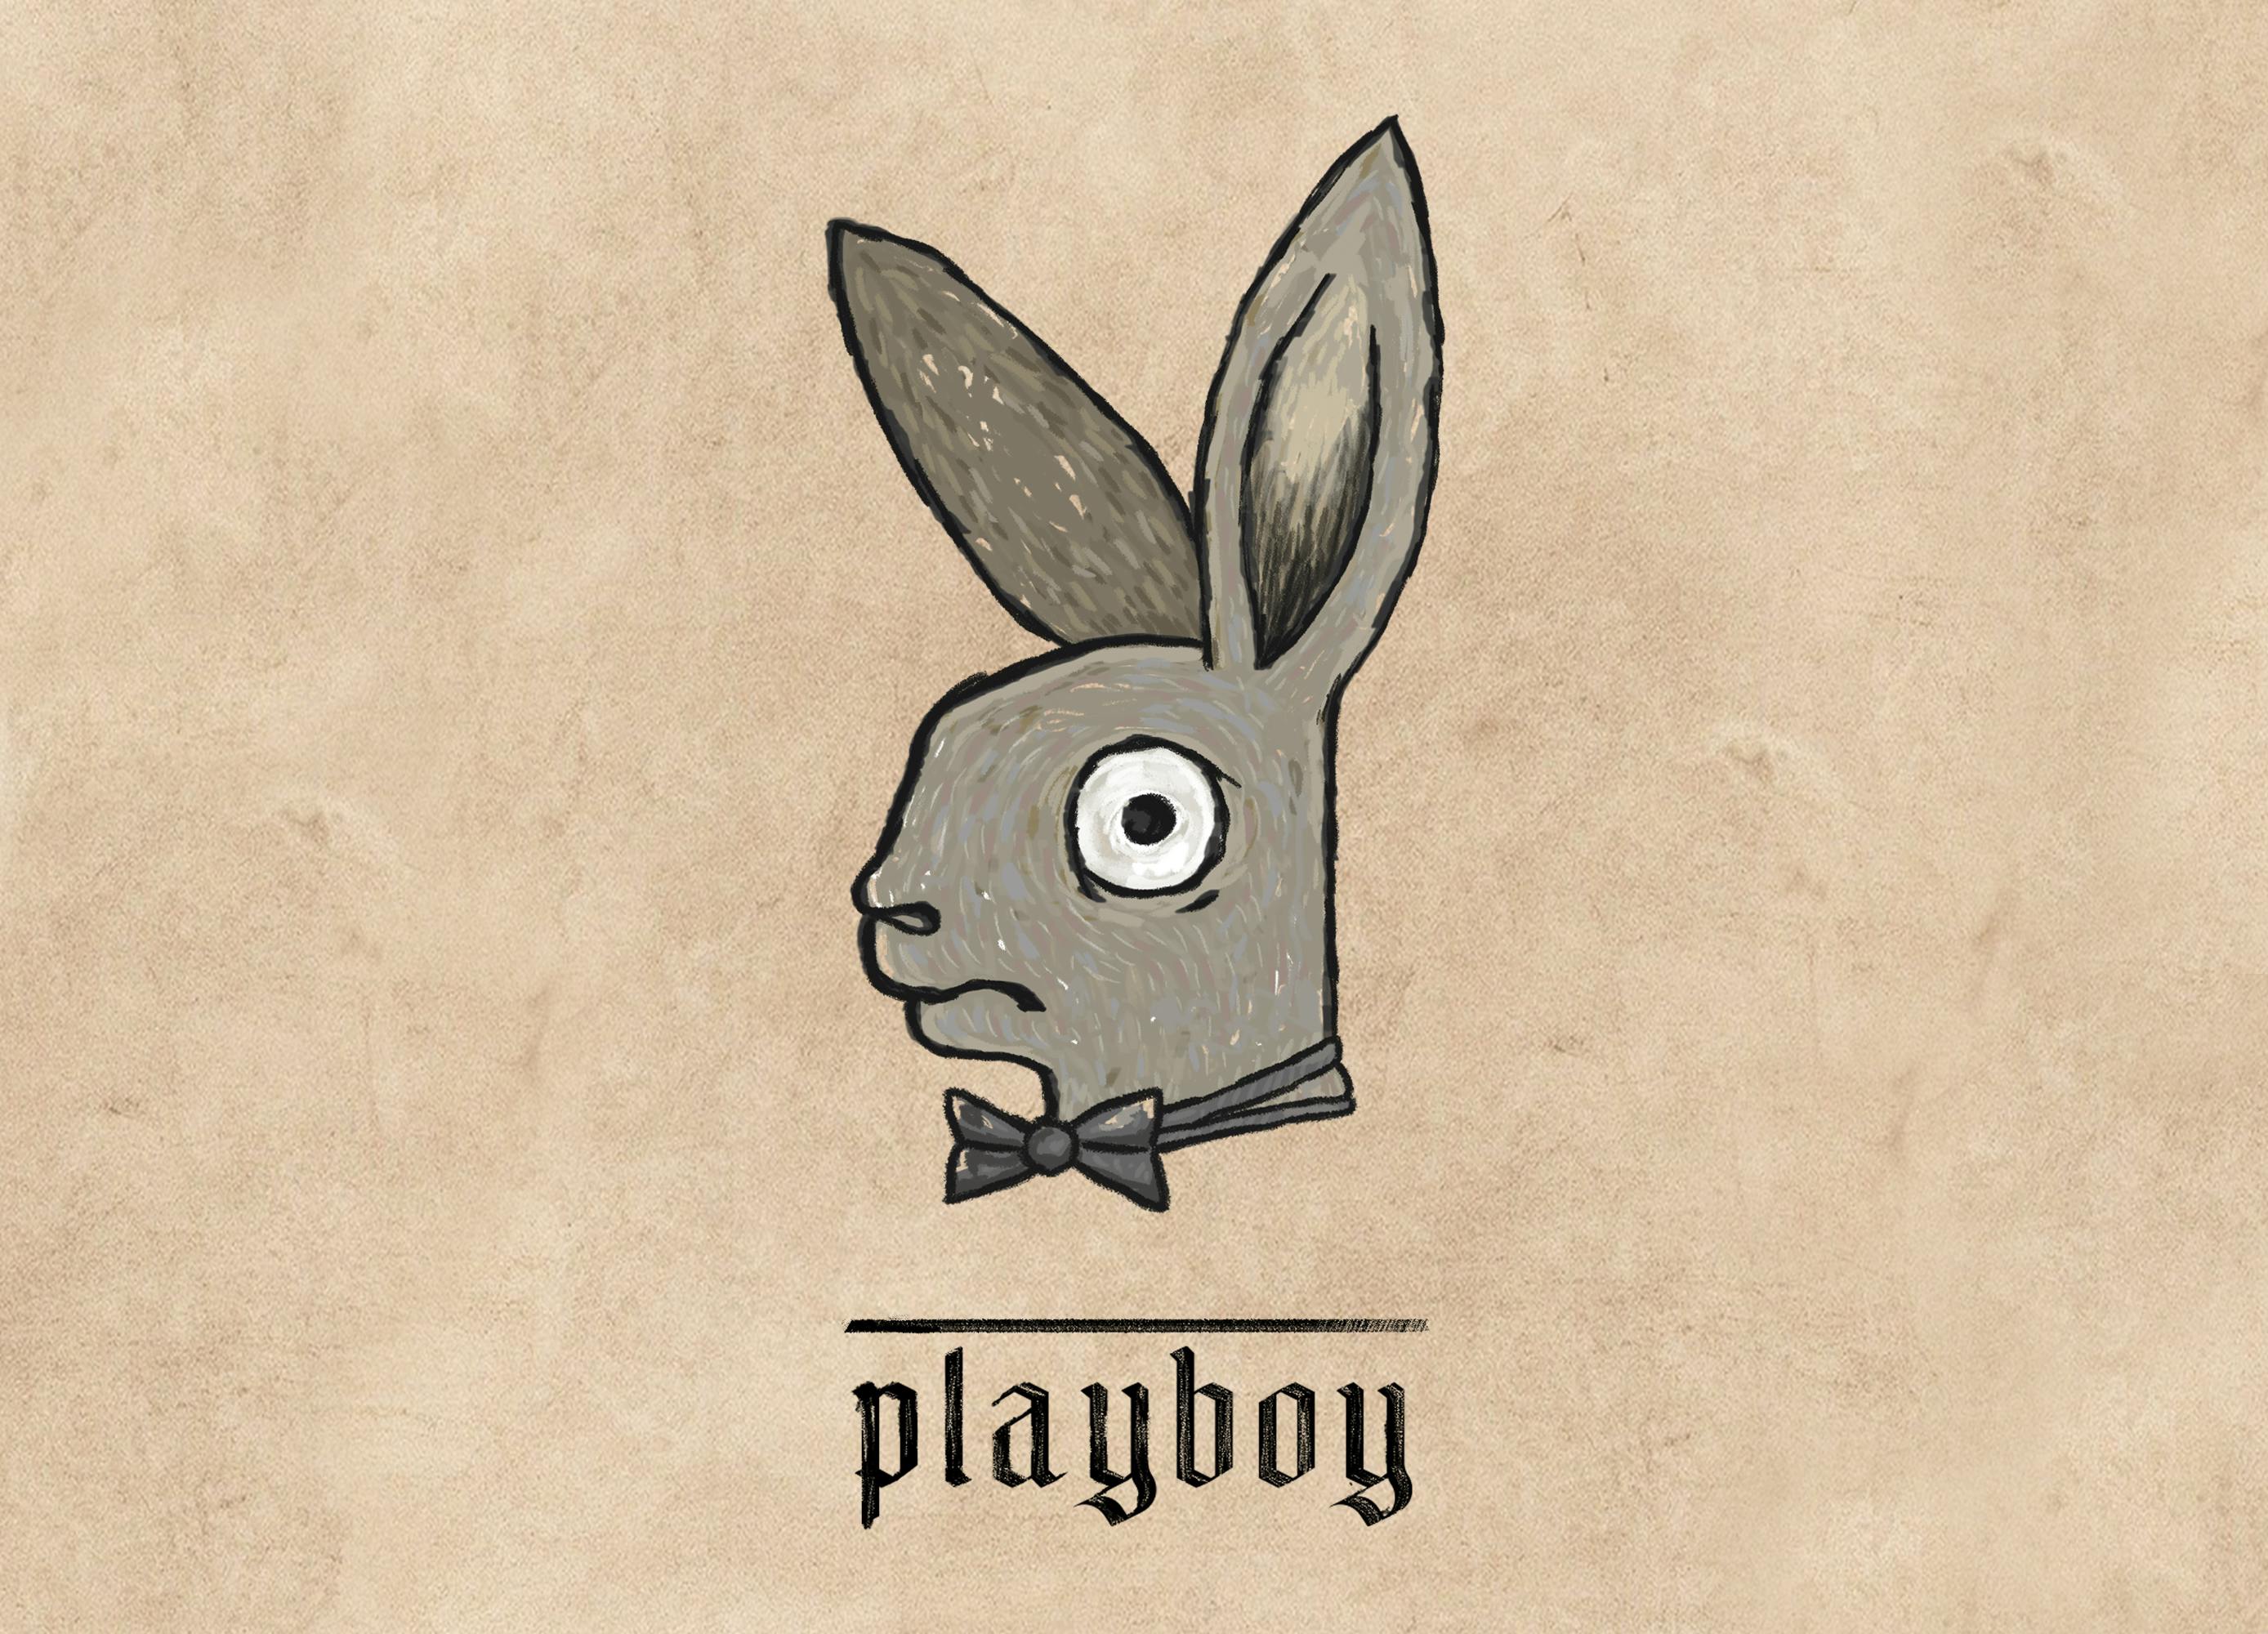 Playboy medieval logo